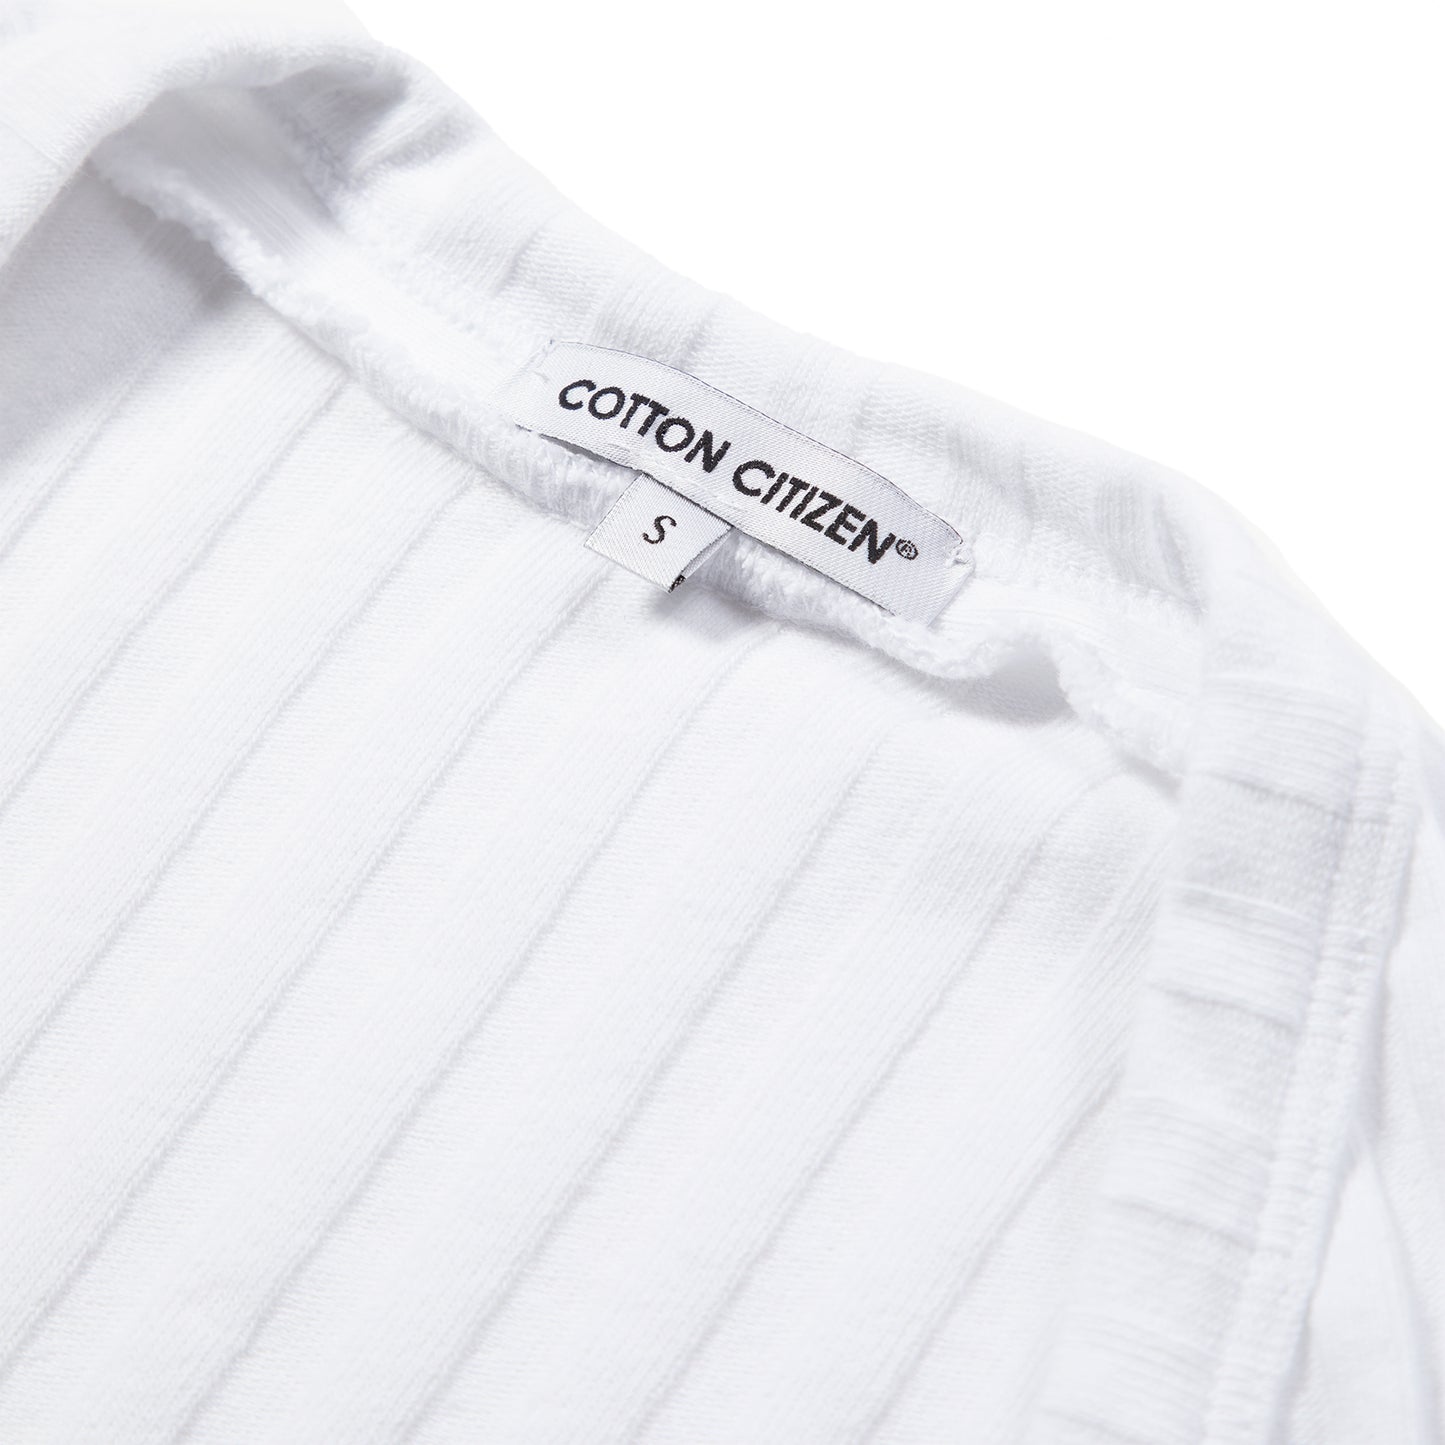 Cotton Citizen Capri Crop Shirt (White)